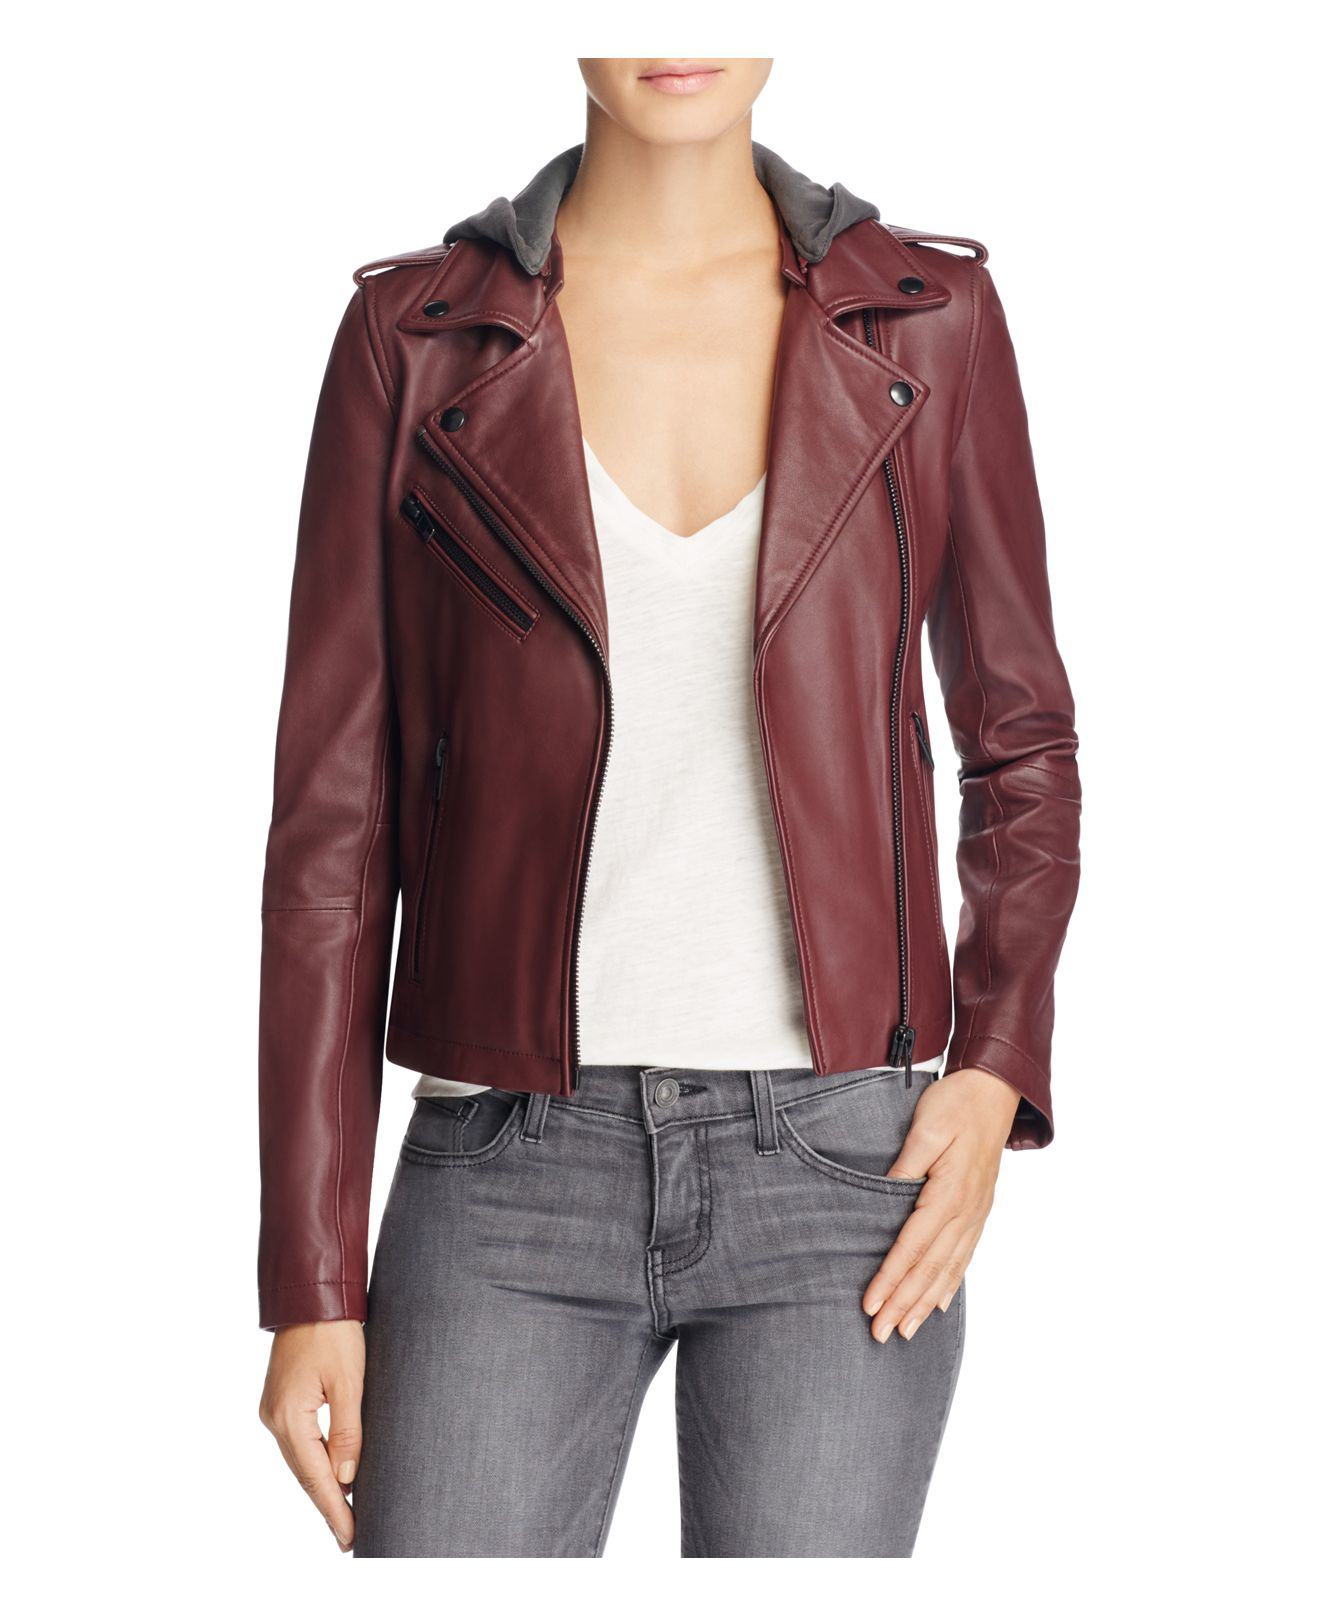 Linea Pelle Hooded Leather Moto Jacket in Red - Lyst